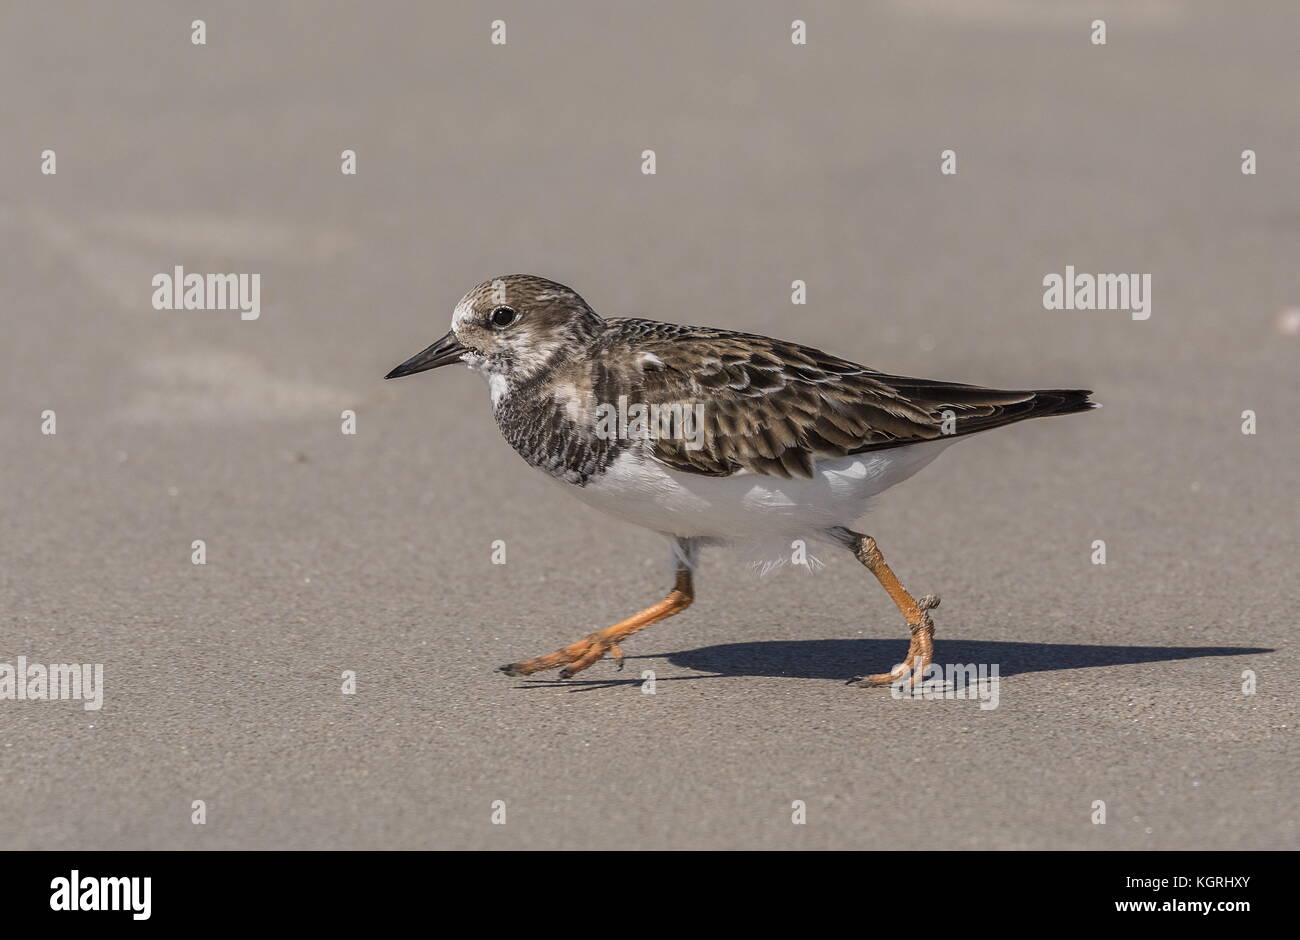 Ruddy turnstone, Arenaria interpres, feeding on sandy beach in winter plumage. Florida Stock Photo